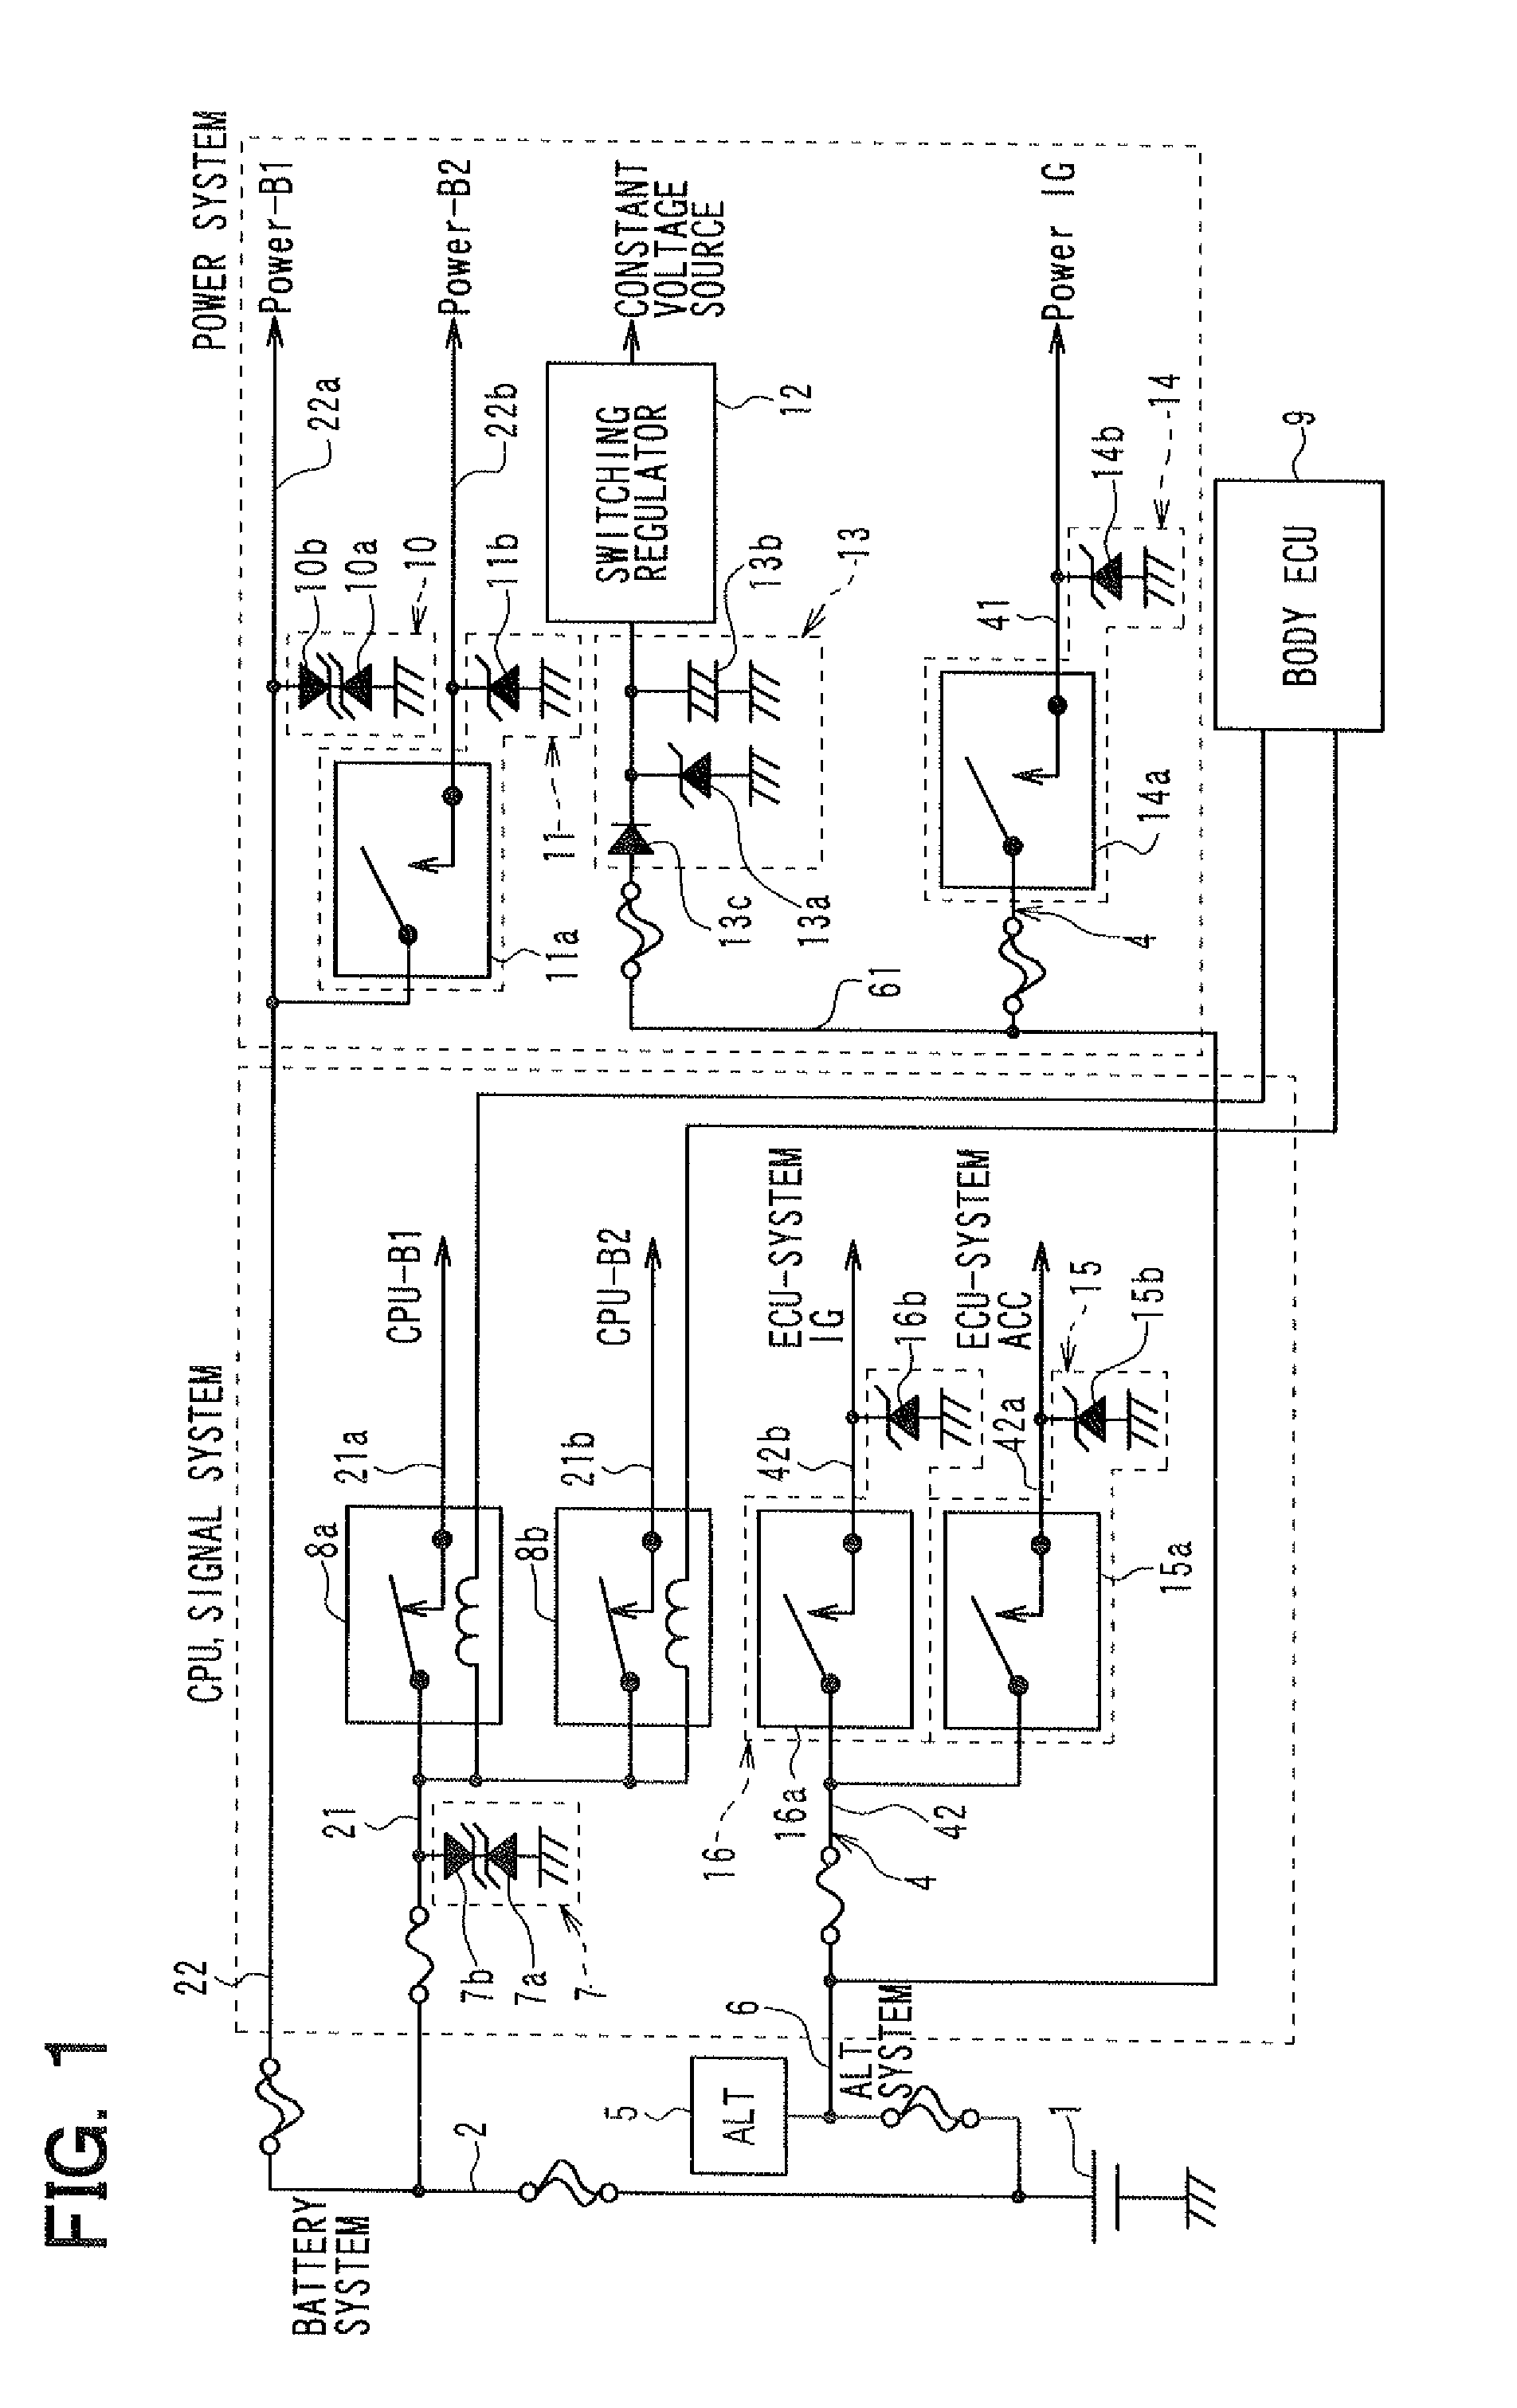 Vehicular power supply circuit